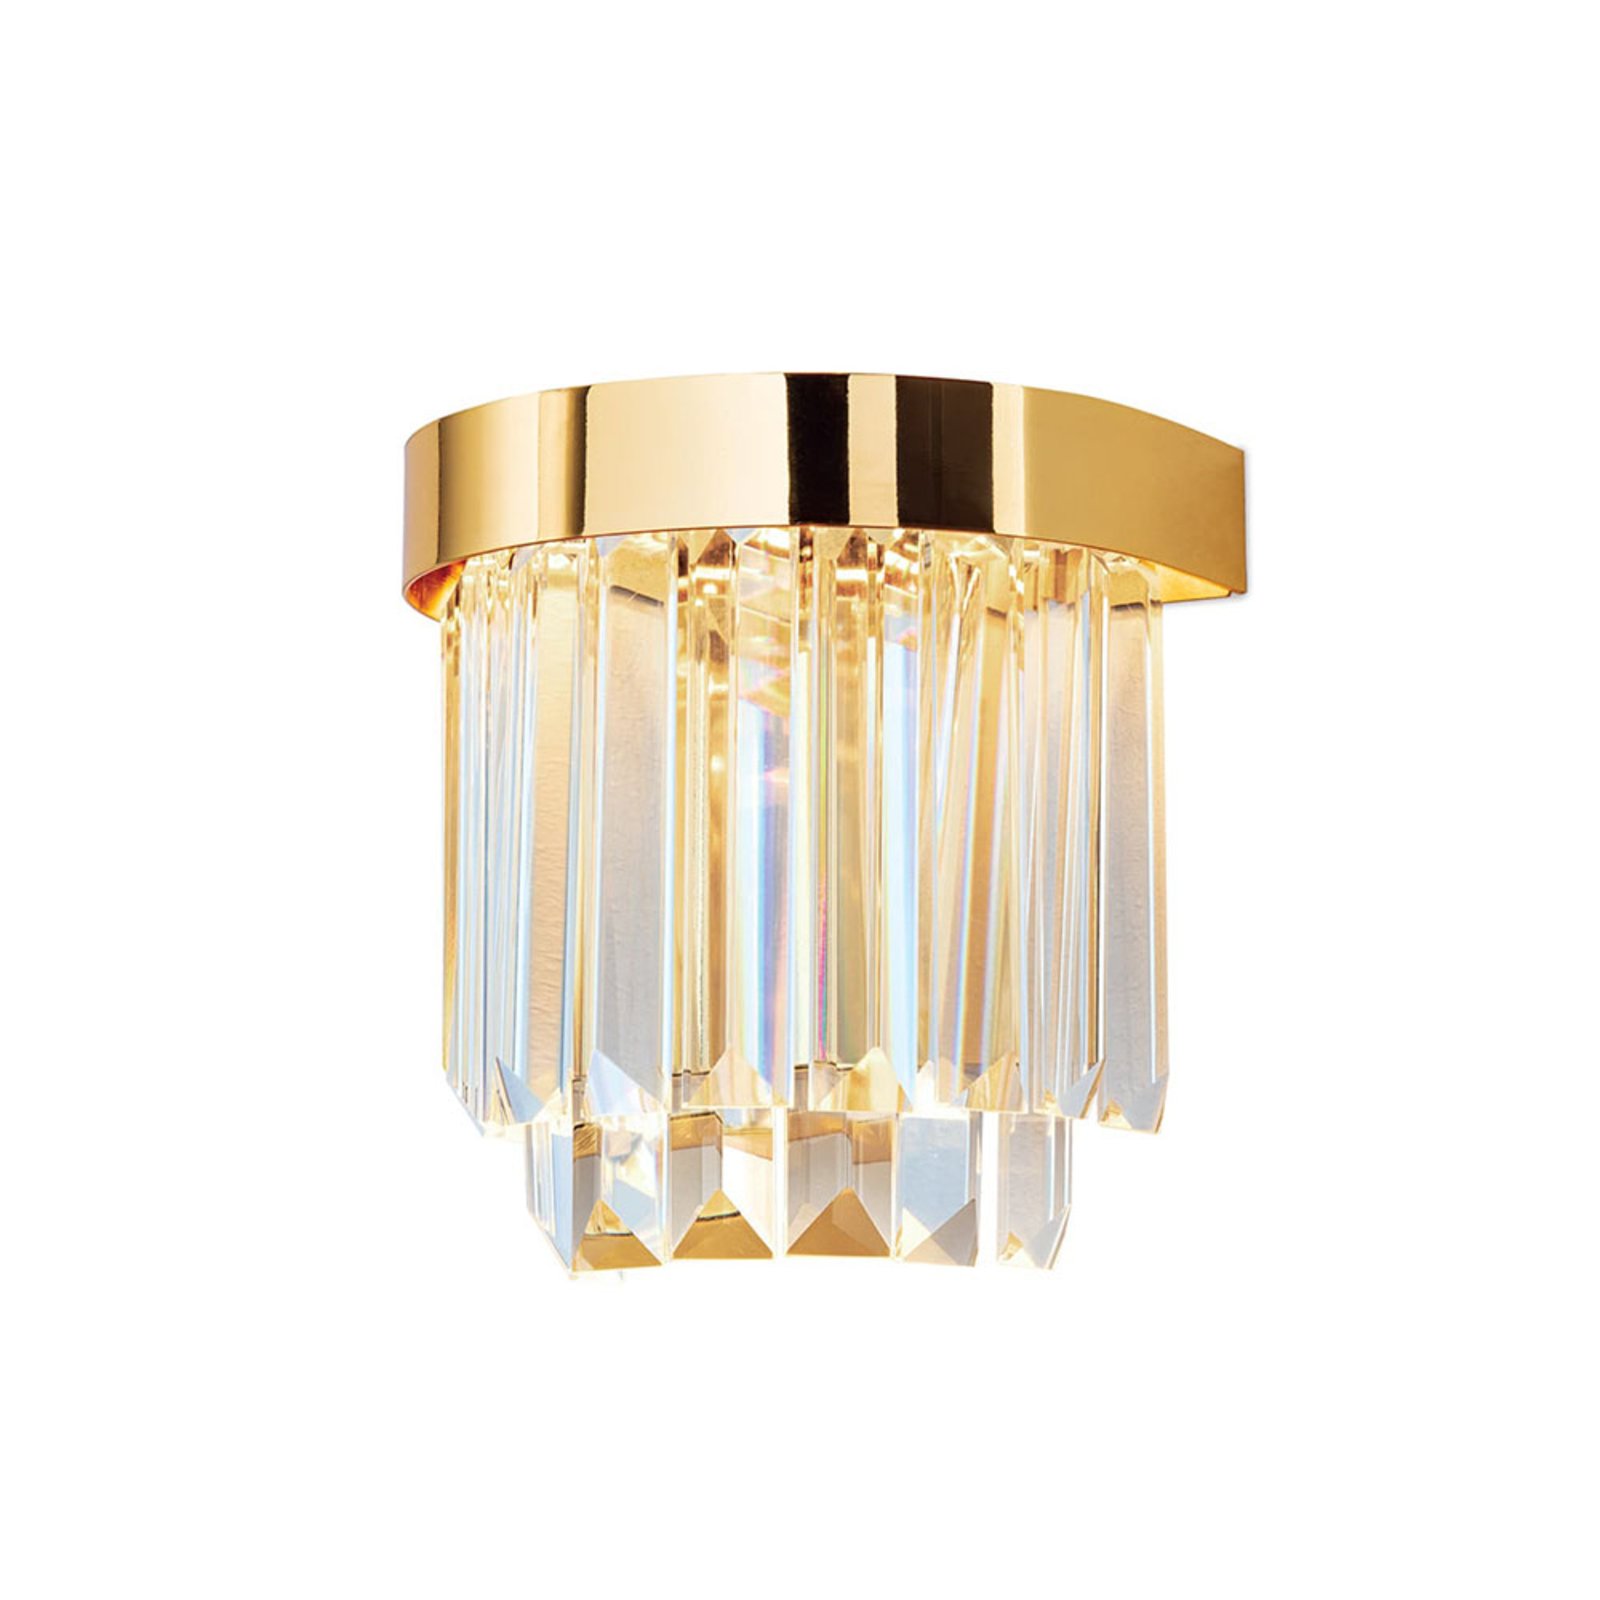 Candeeiro de parede Prism LED com luz ascendente e descendente, dourado